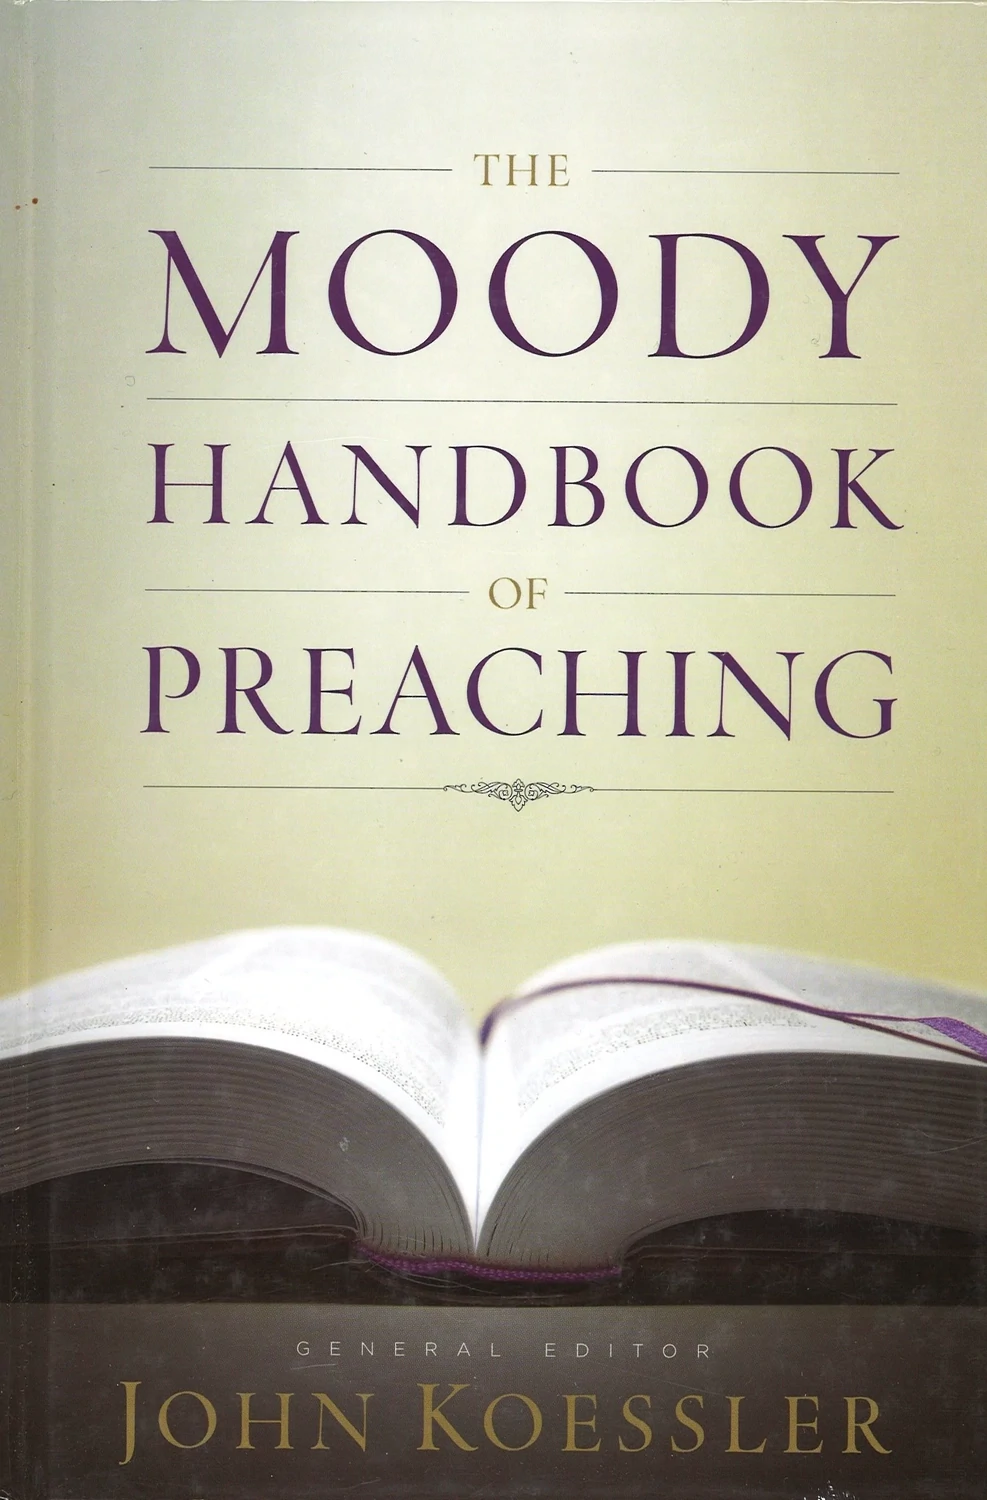 The Moody Handbook of Preaching